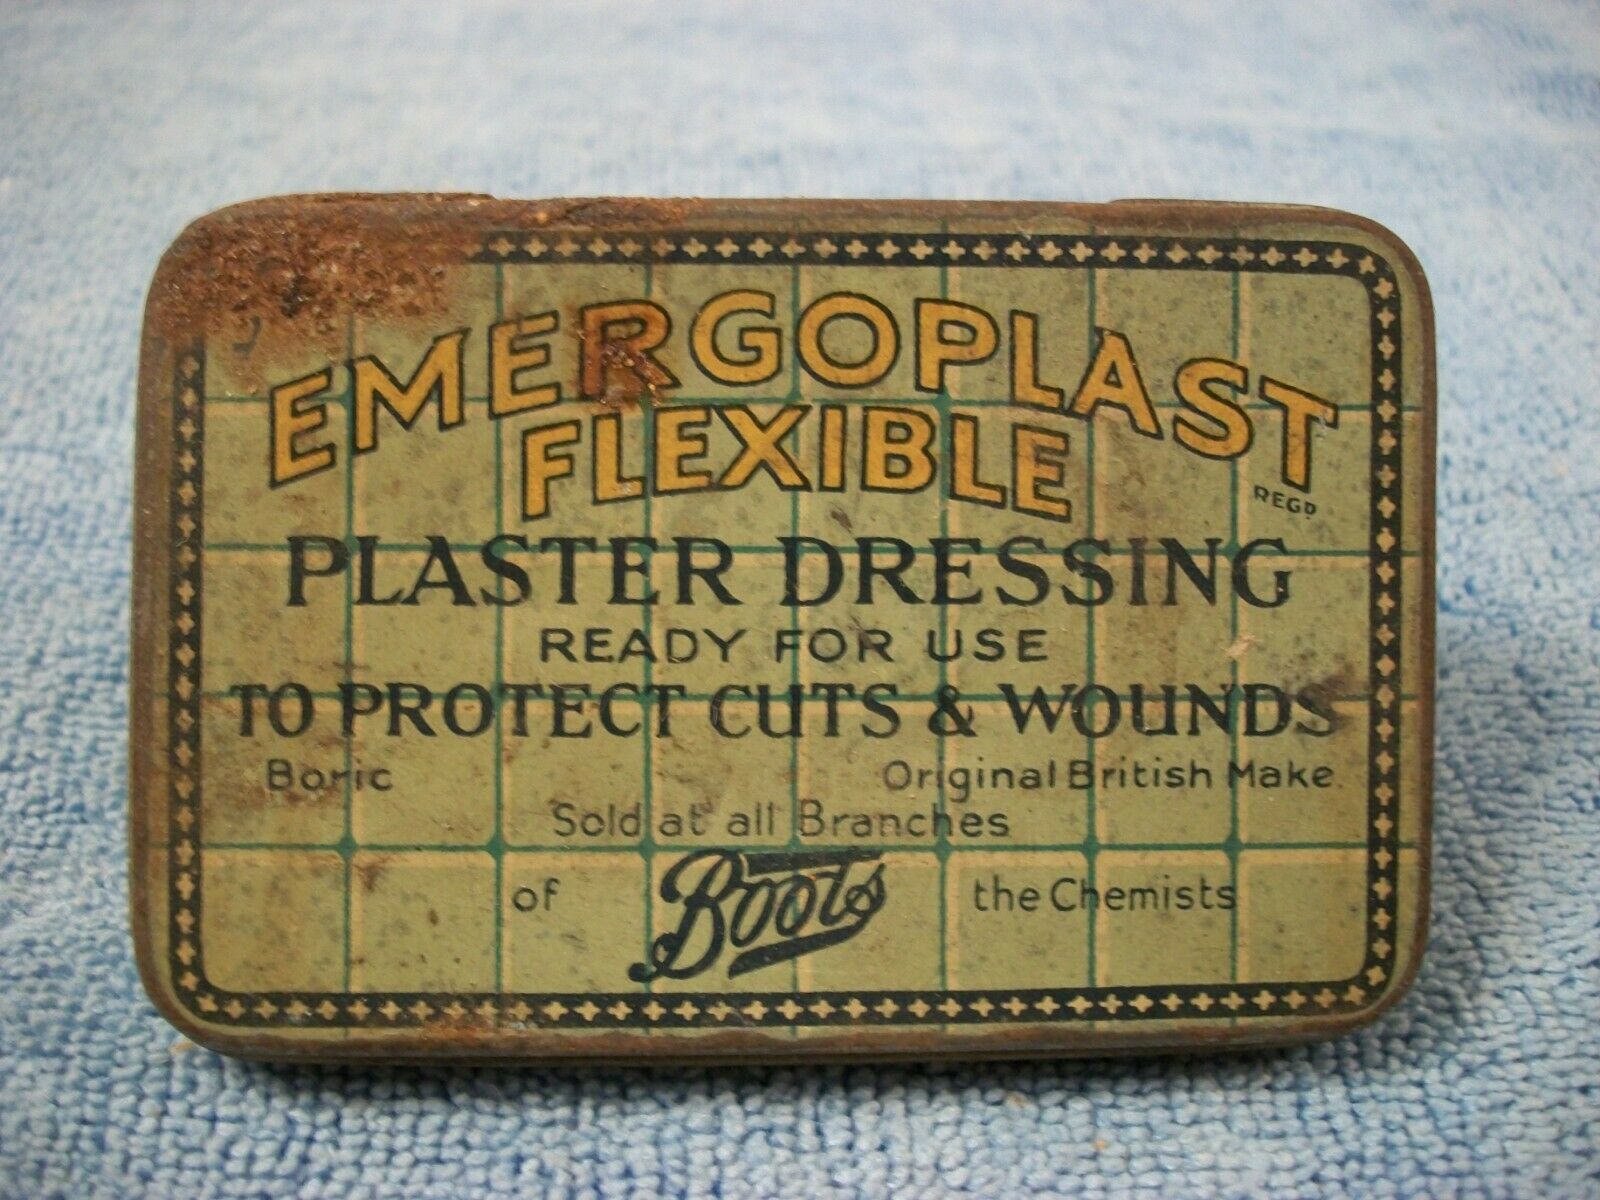 Vintage  Boots Emergoplast Flexible Plaster Dressing Metal Full Tin